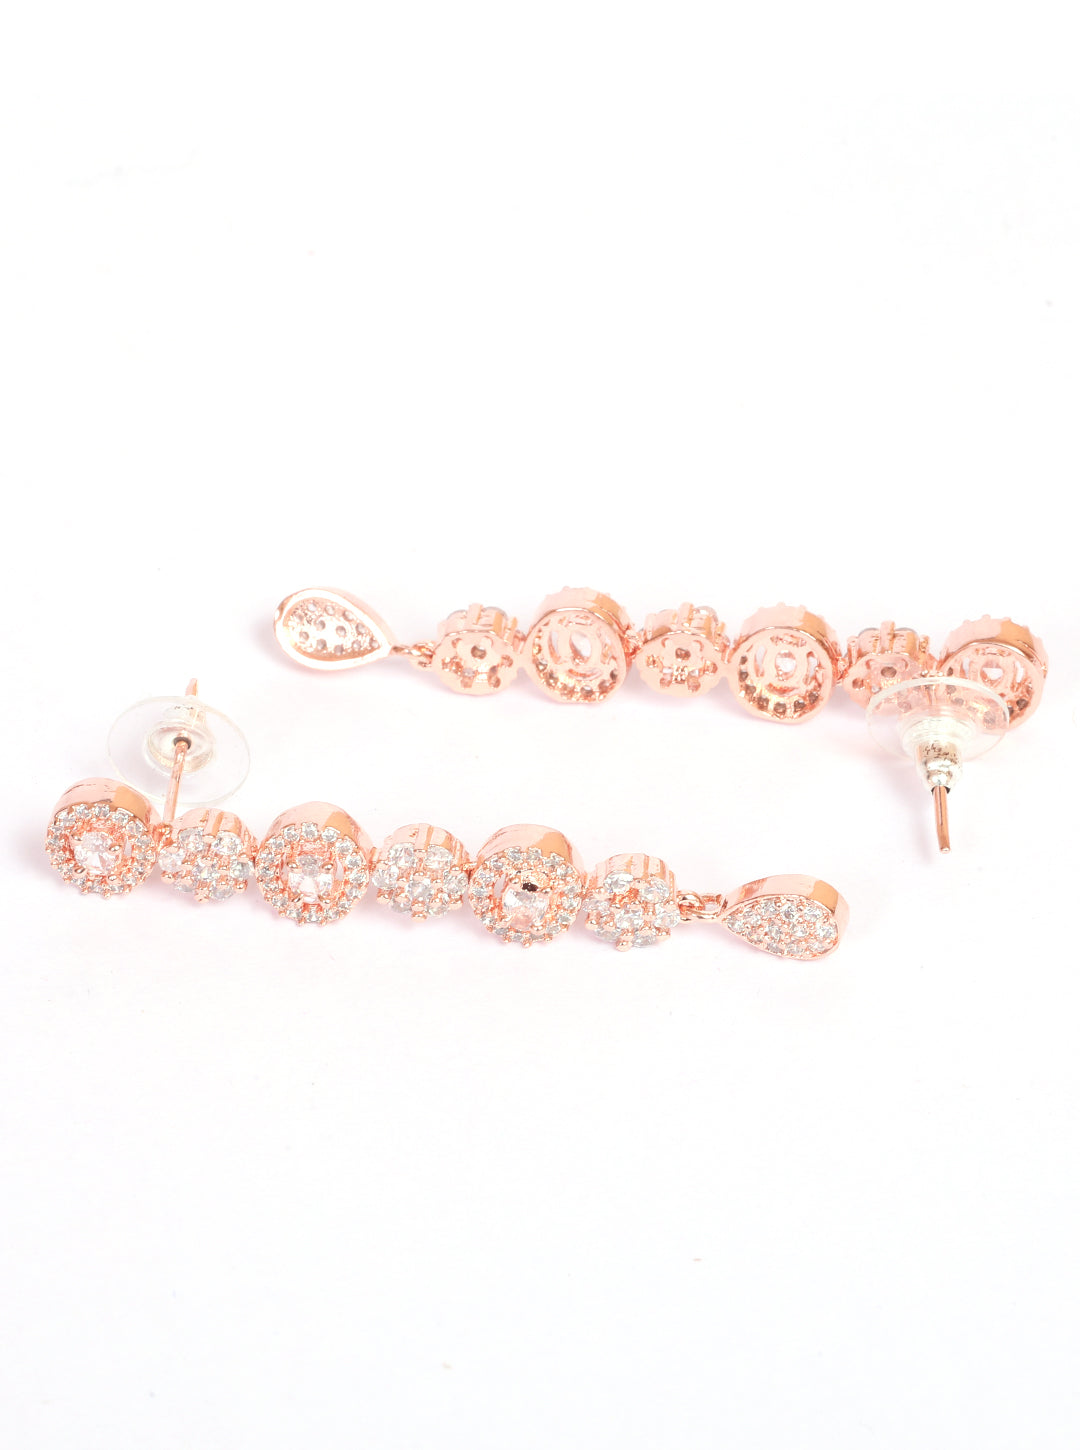 Premium Rose Gold Plated with sparkling White CZ stones designer Necklace Set 8949N